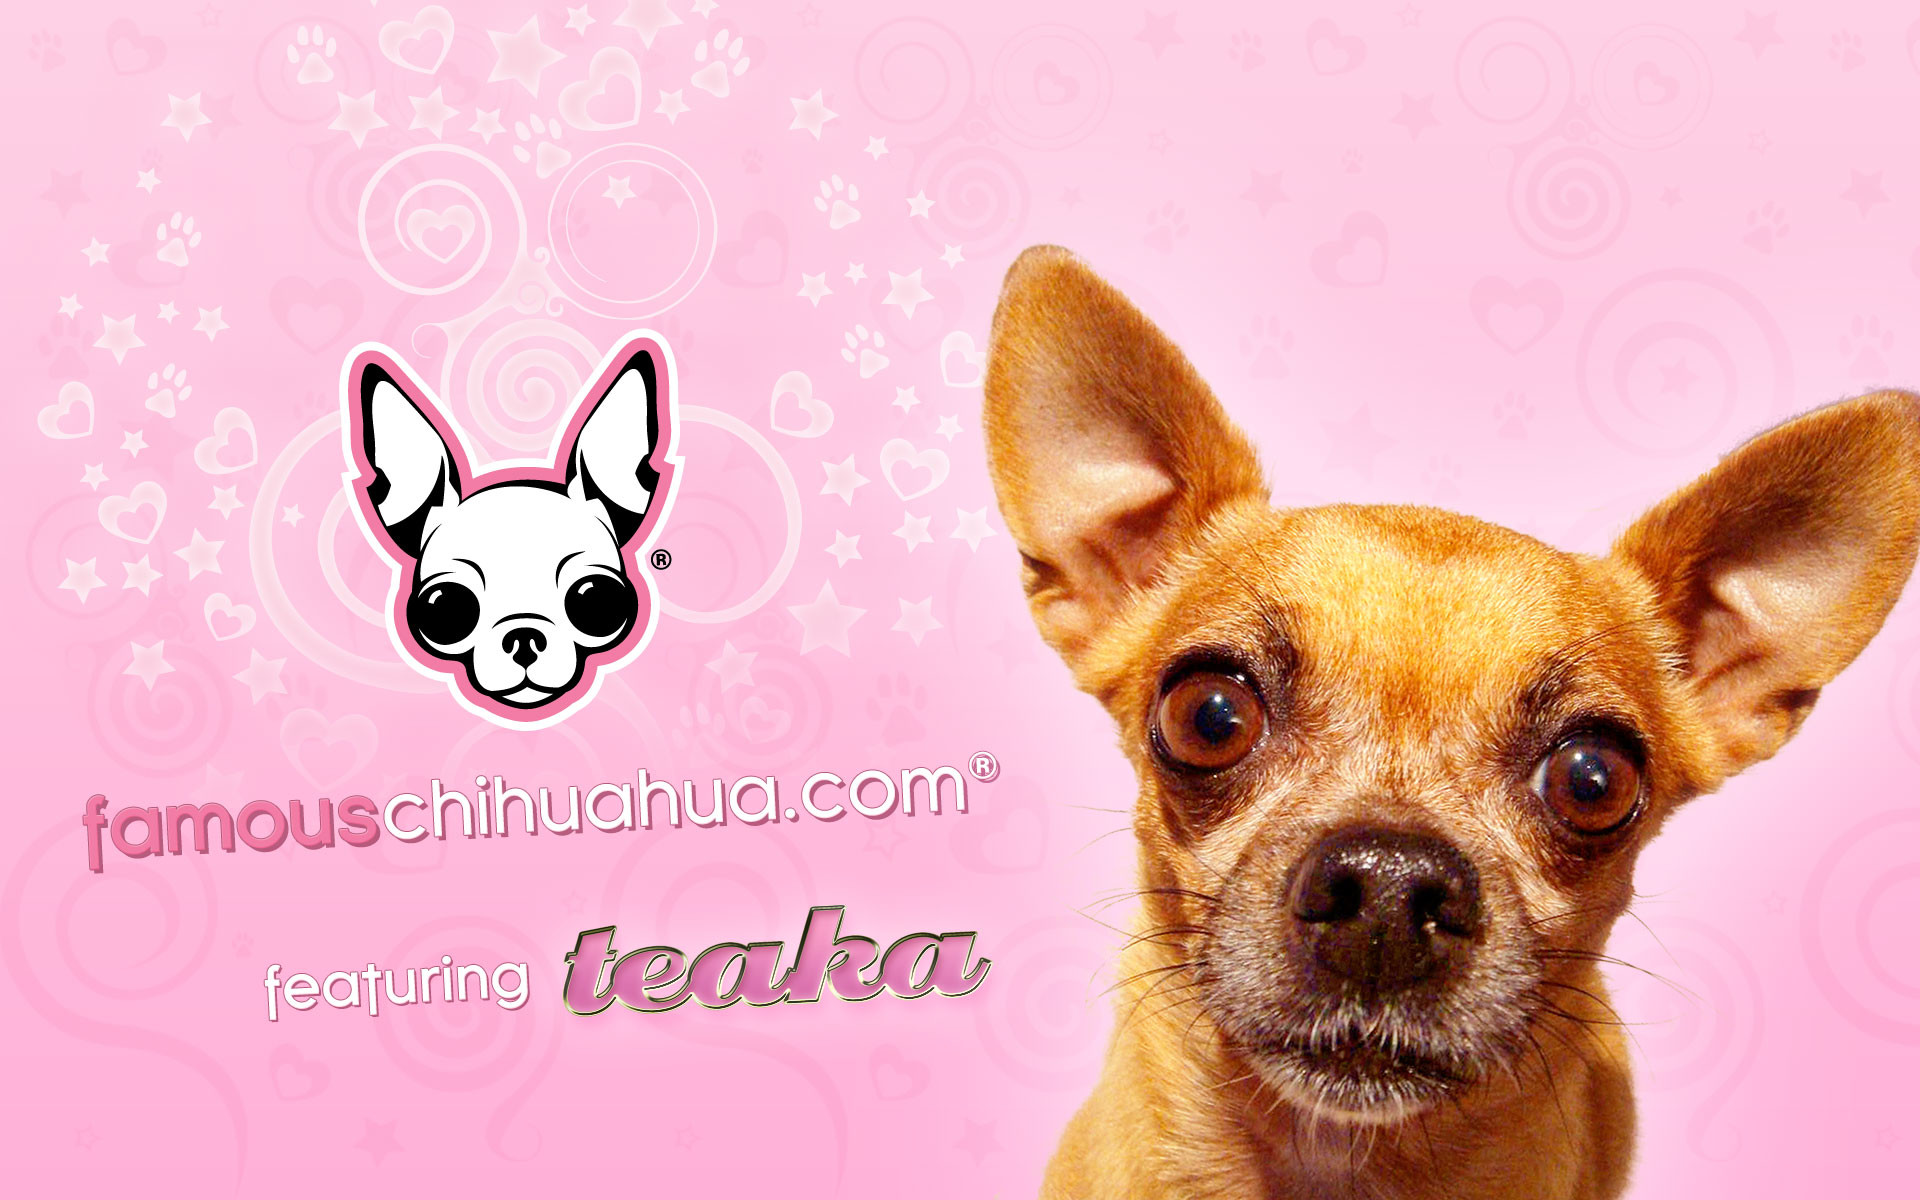 … download famous chihuahua wallpaper (size:1920Ã1200 pixels)